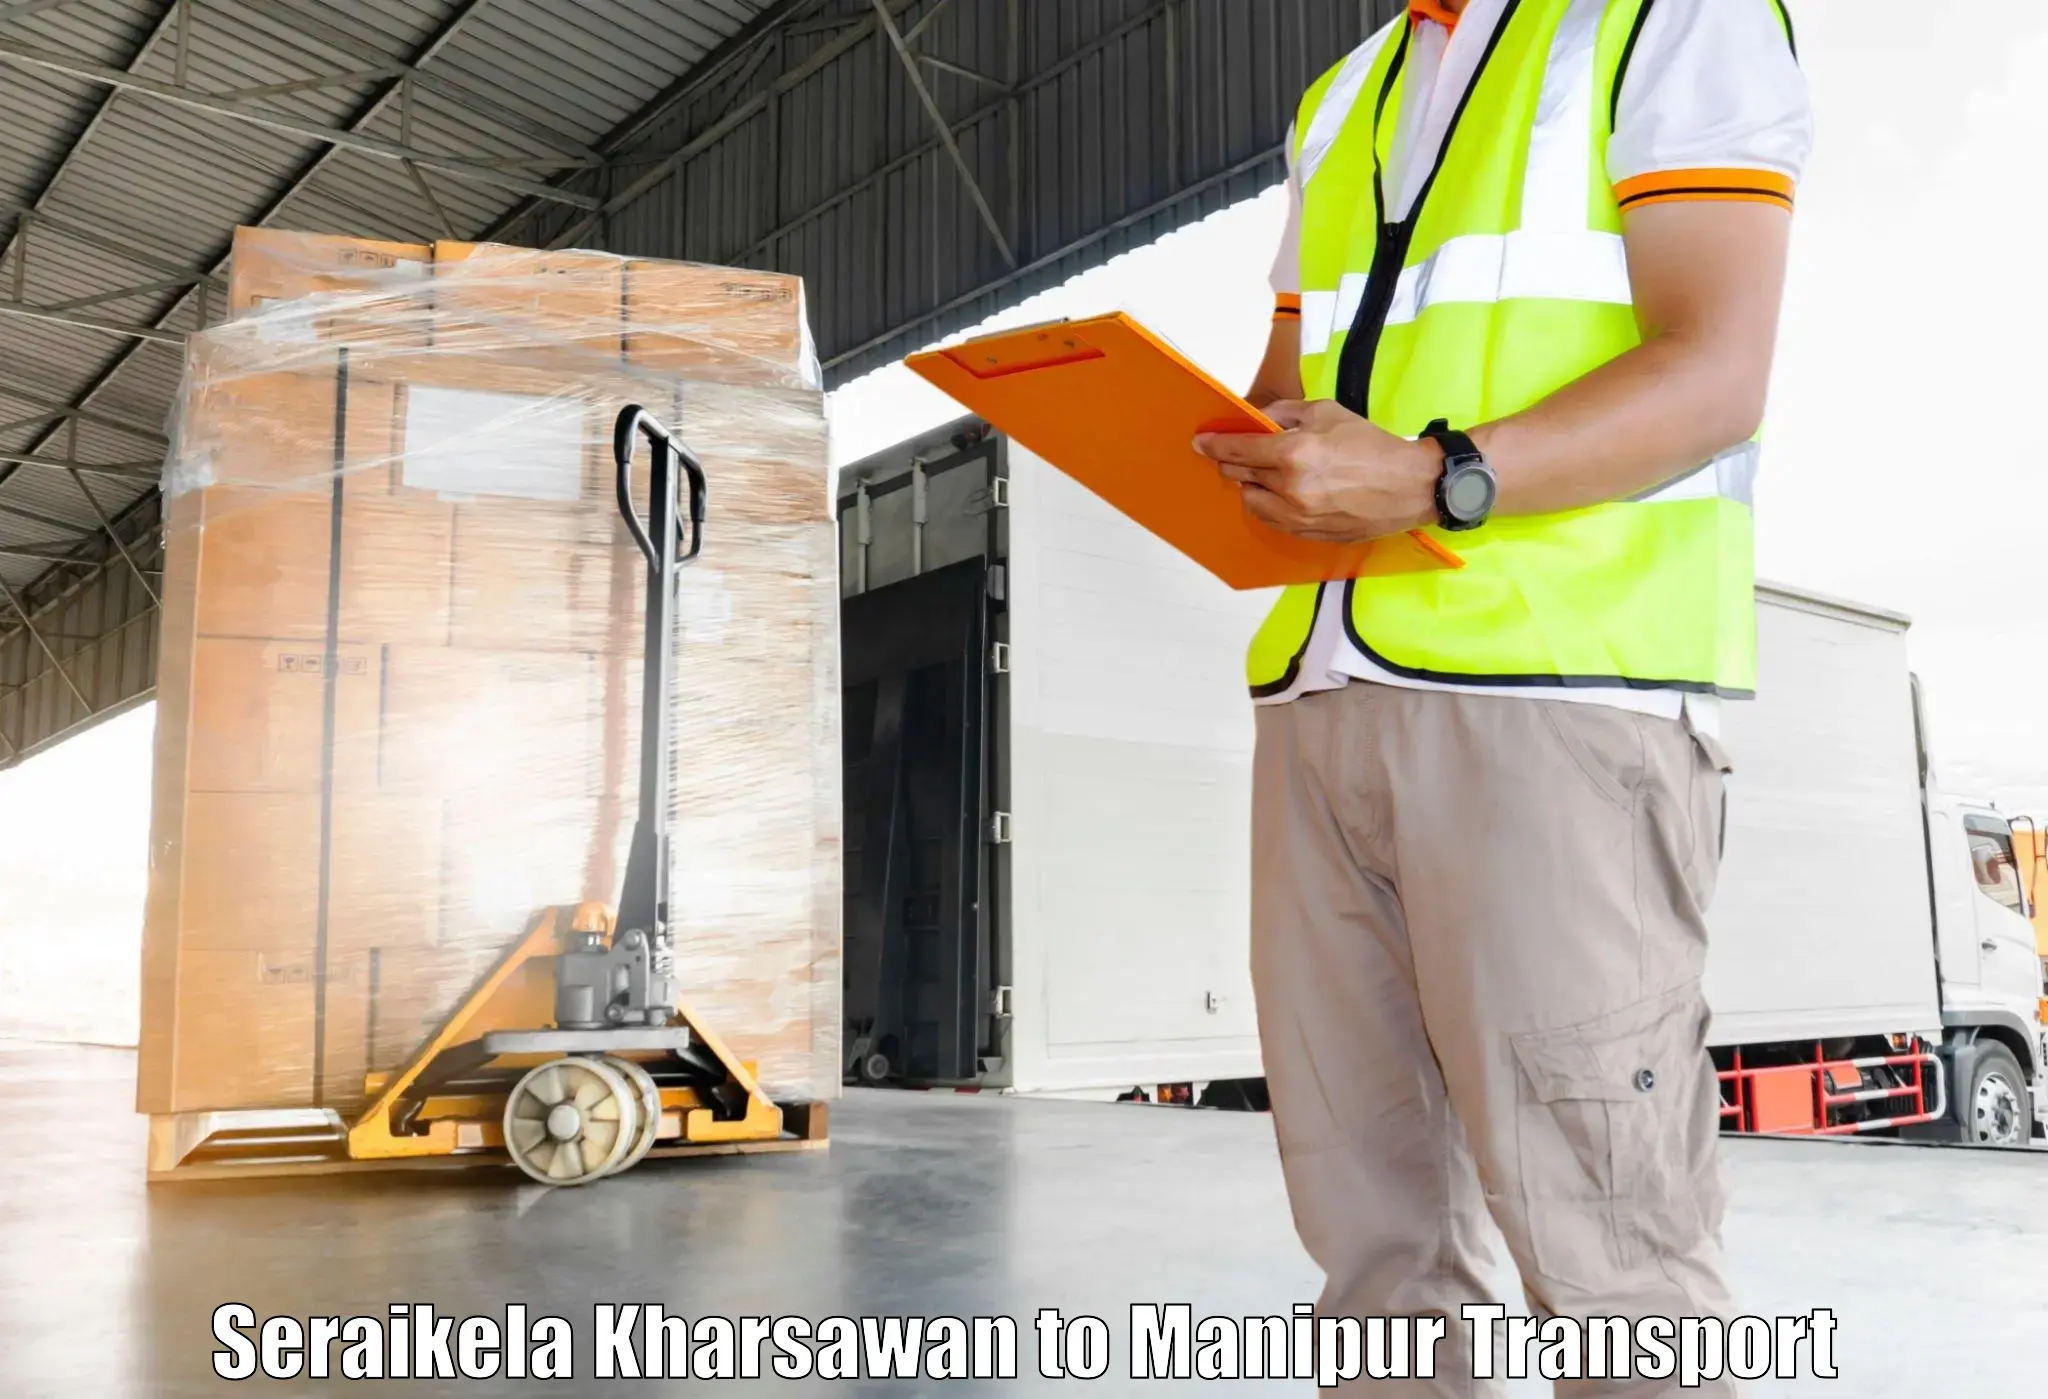 Commercial transport service Seraikela Kharsawan to Imphal